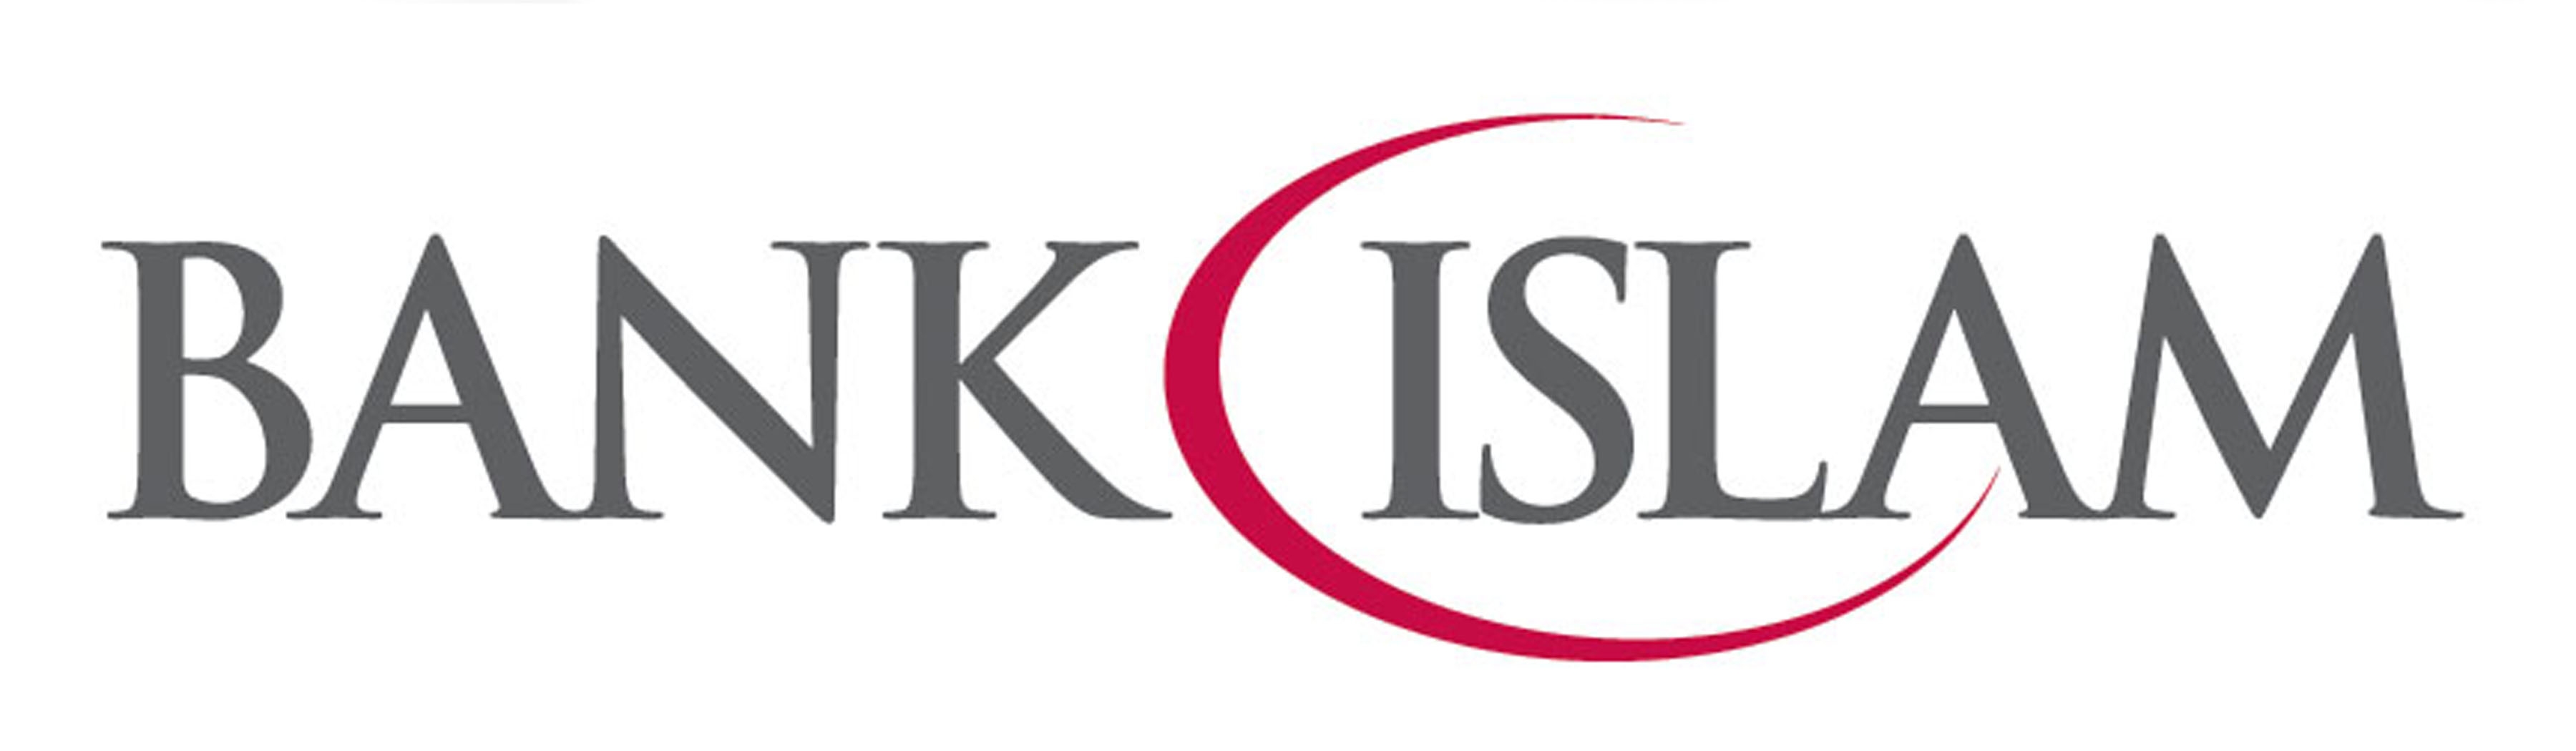 Bank Islam (new) Logo photo - 1